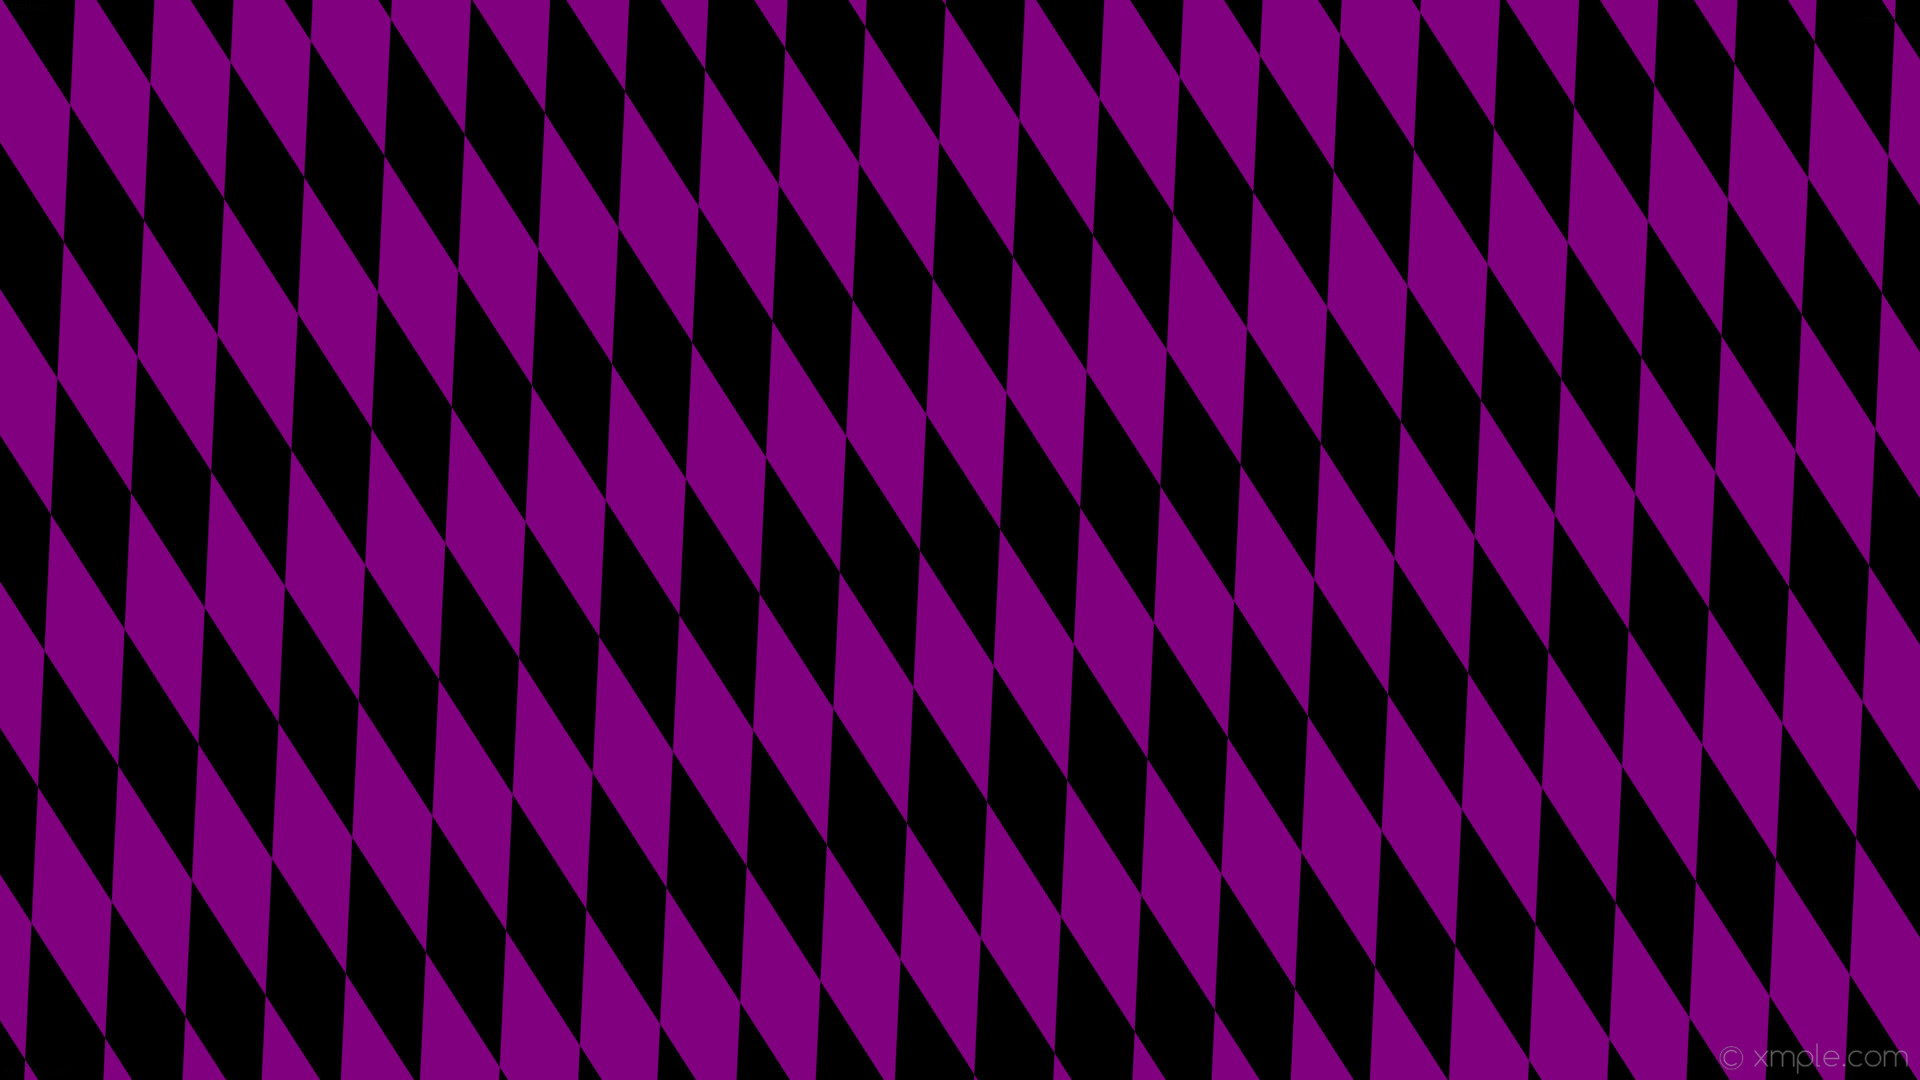 1920x1080 wallpaper lozenge black purple diamond rhombus #000000 #800080 105Â° 260px  83px